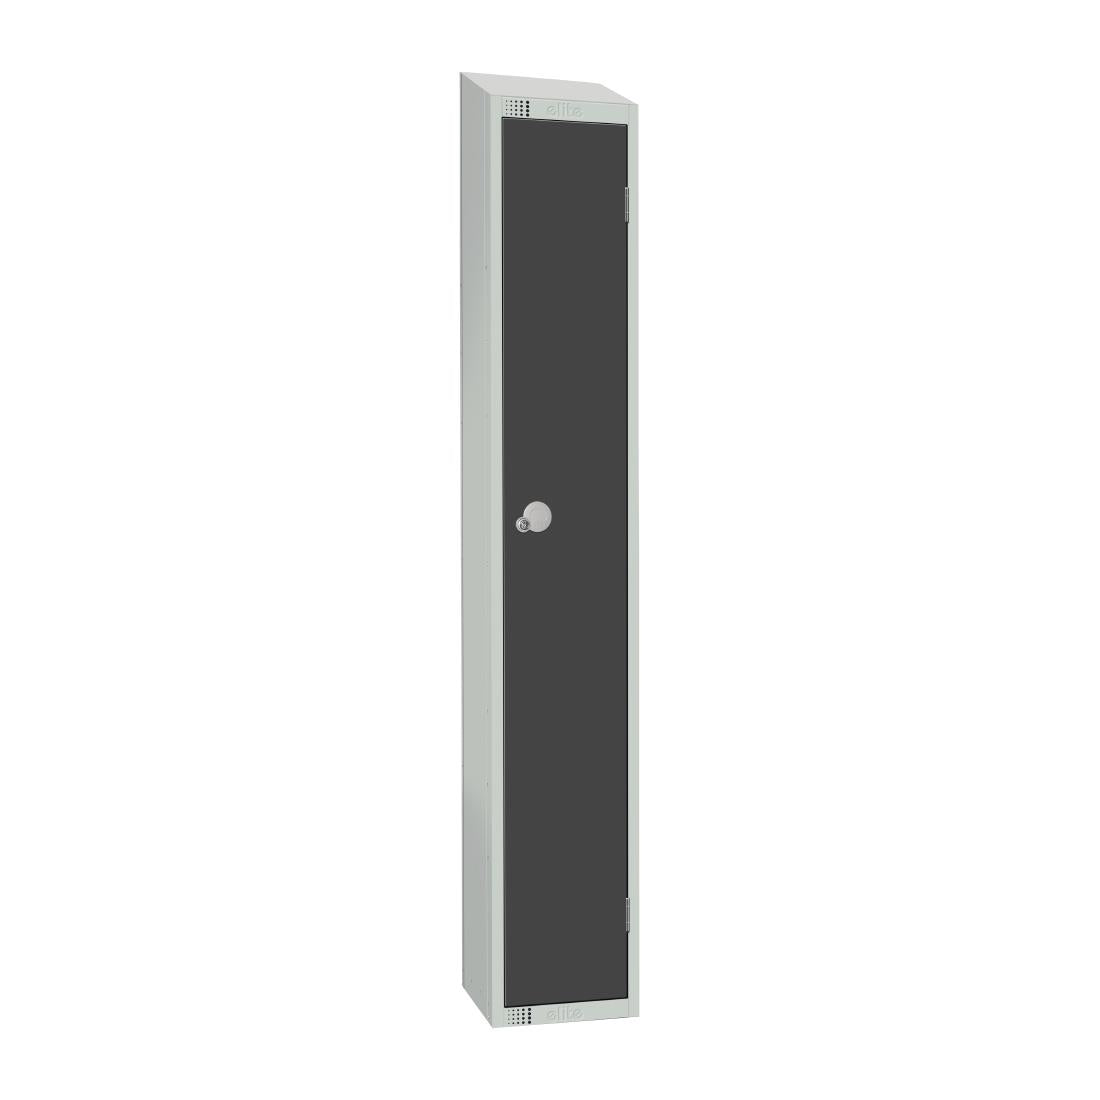 GR677-CNS Elite Single Door Coin Return Locker with Sloping Top Graphite Grey JD Catering Equipment Solutions Ltd